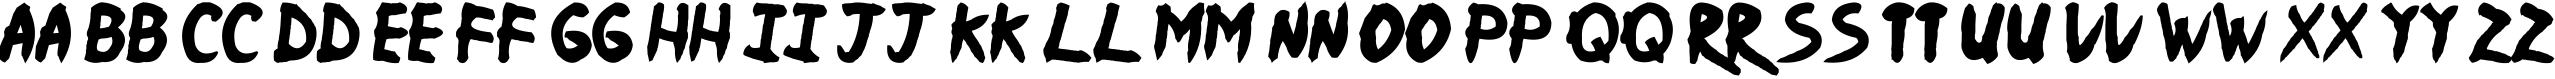 Пример написания английского алфавита шрифтом Ninja Naruto